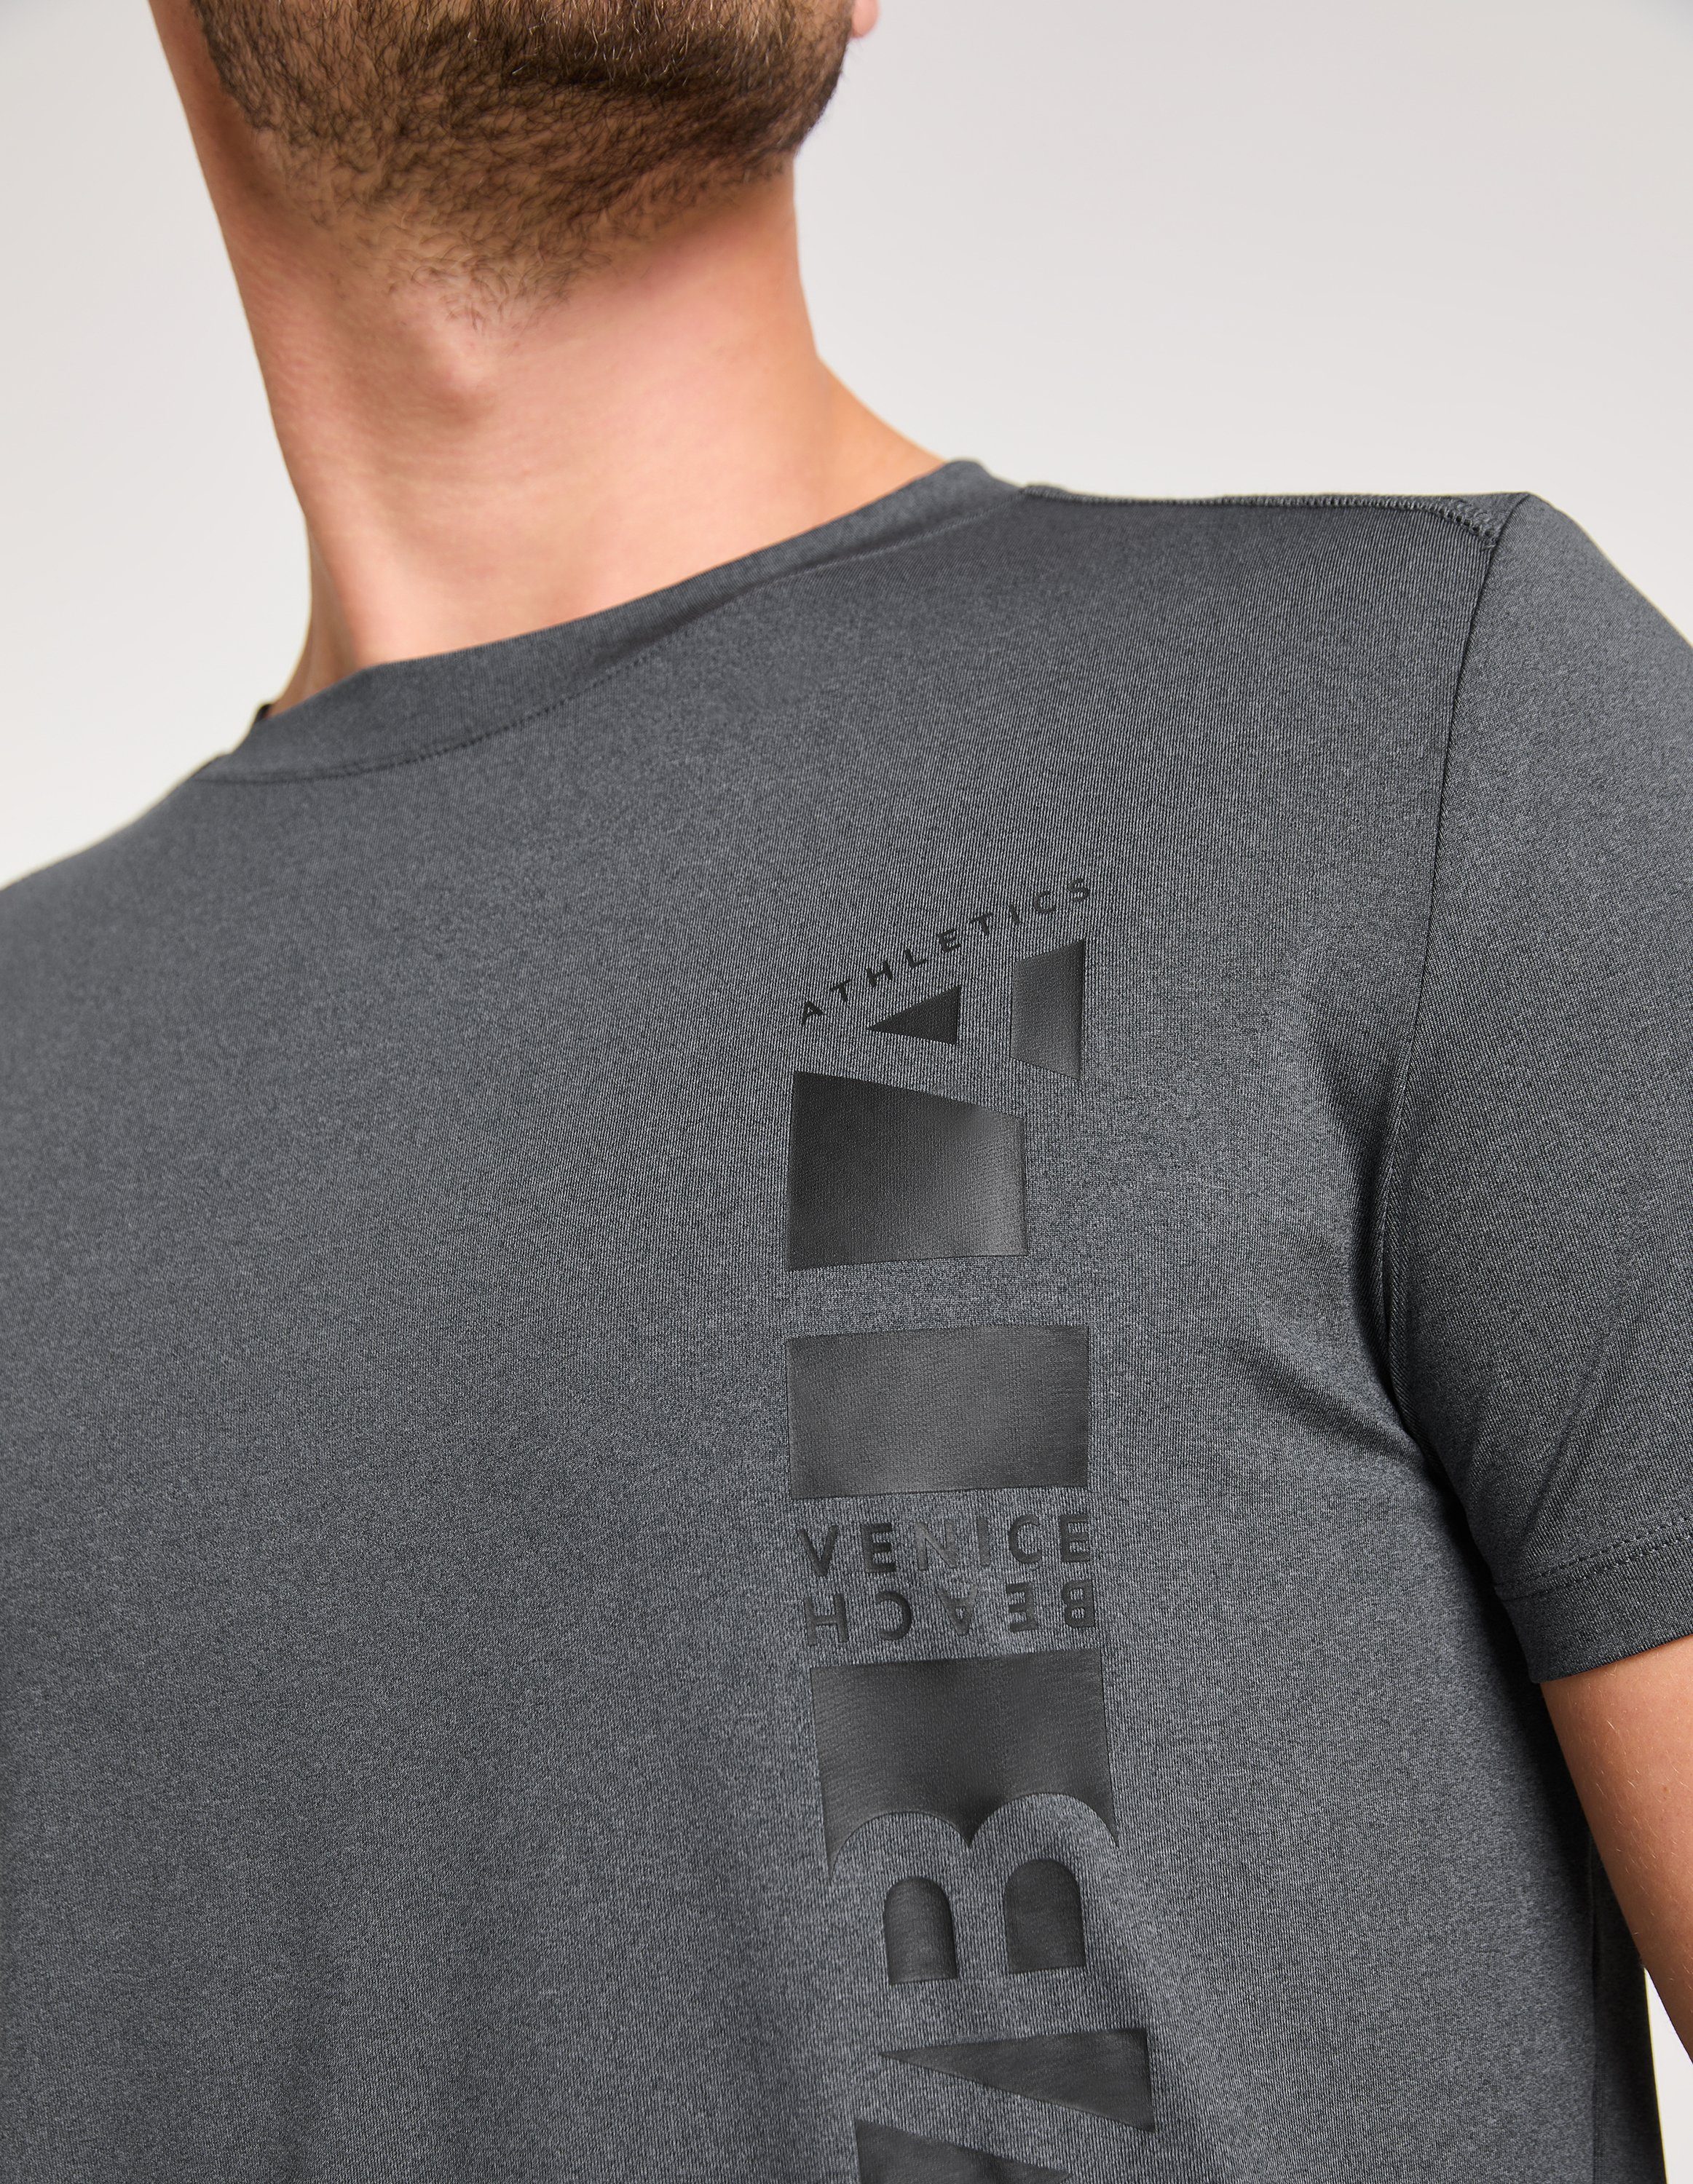 Venice T-Shirt Men Beach HAYES T-Shirt VB